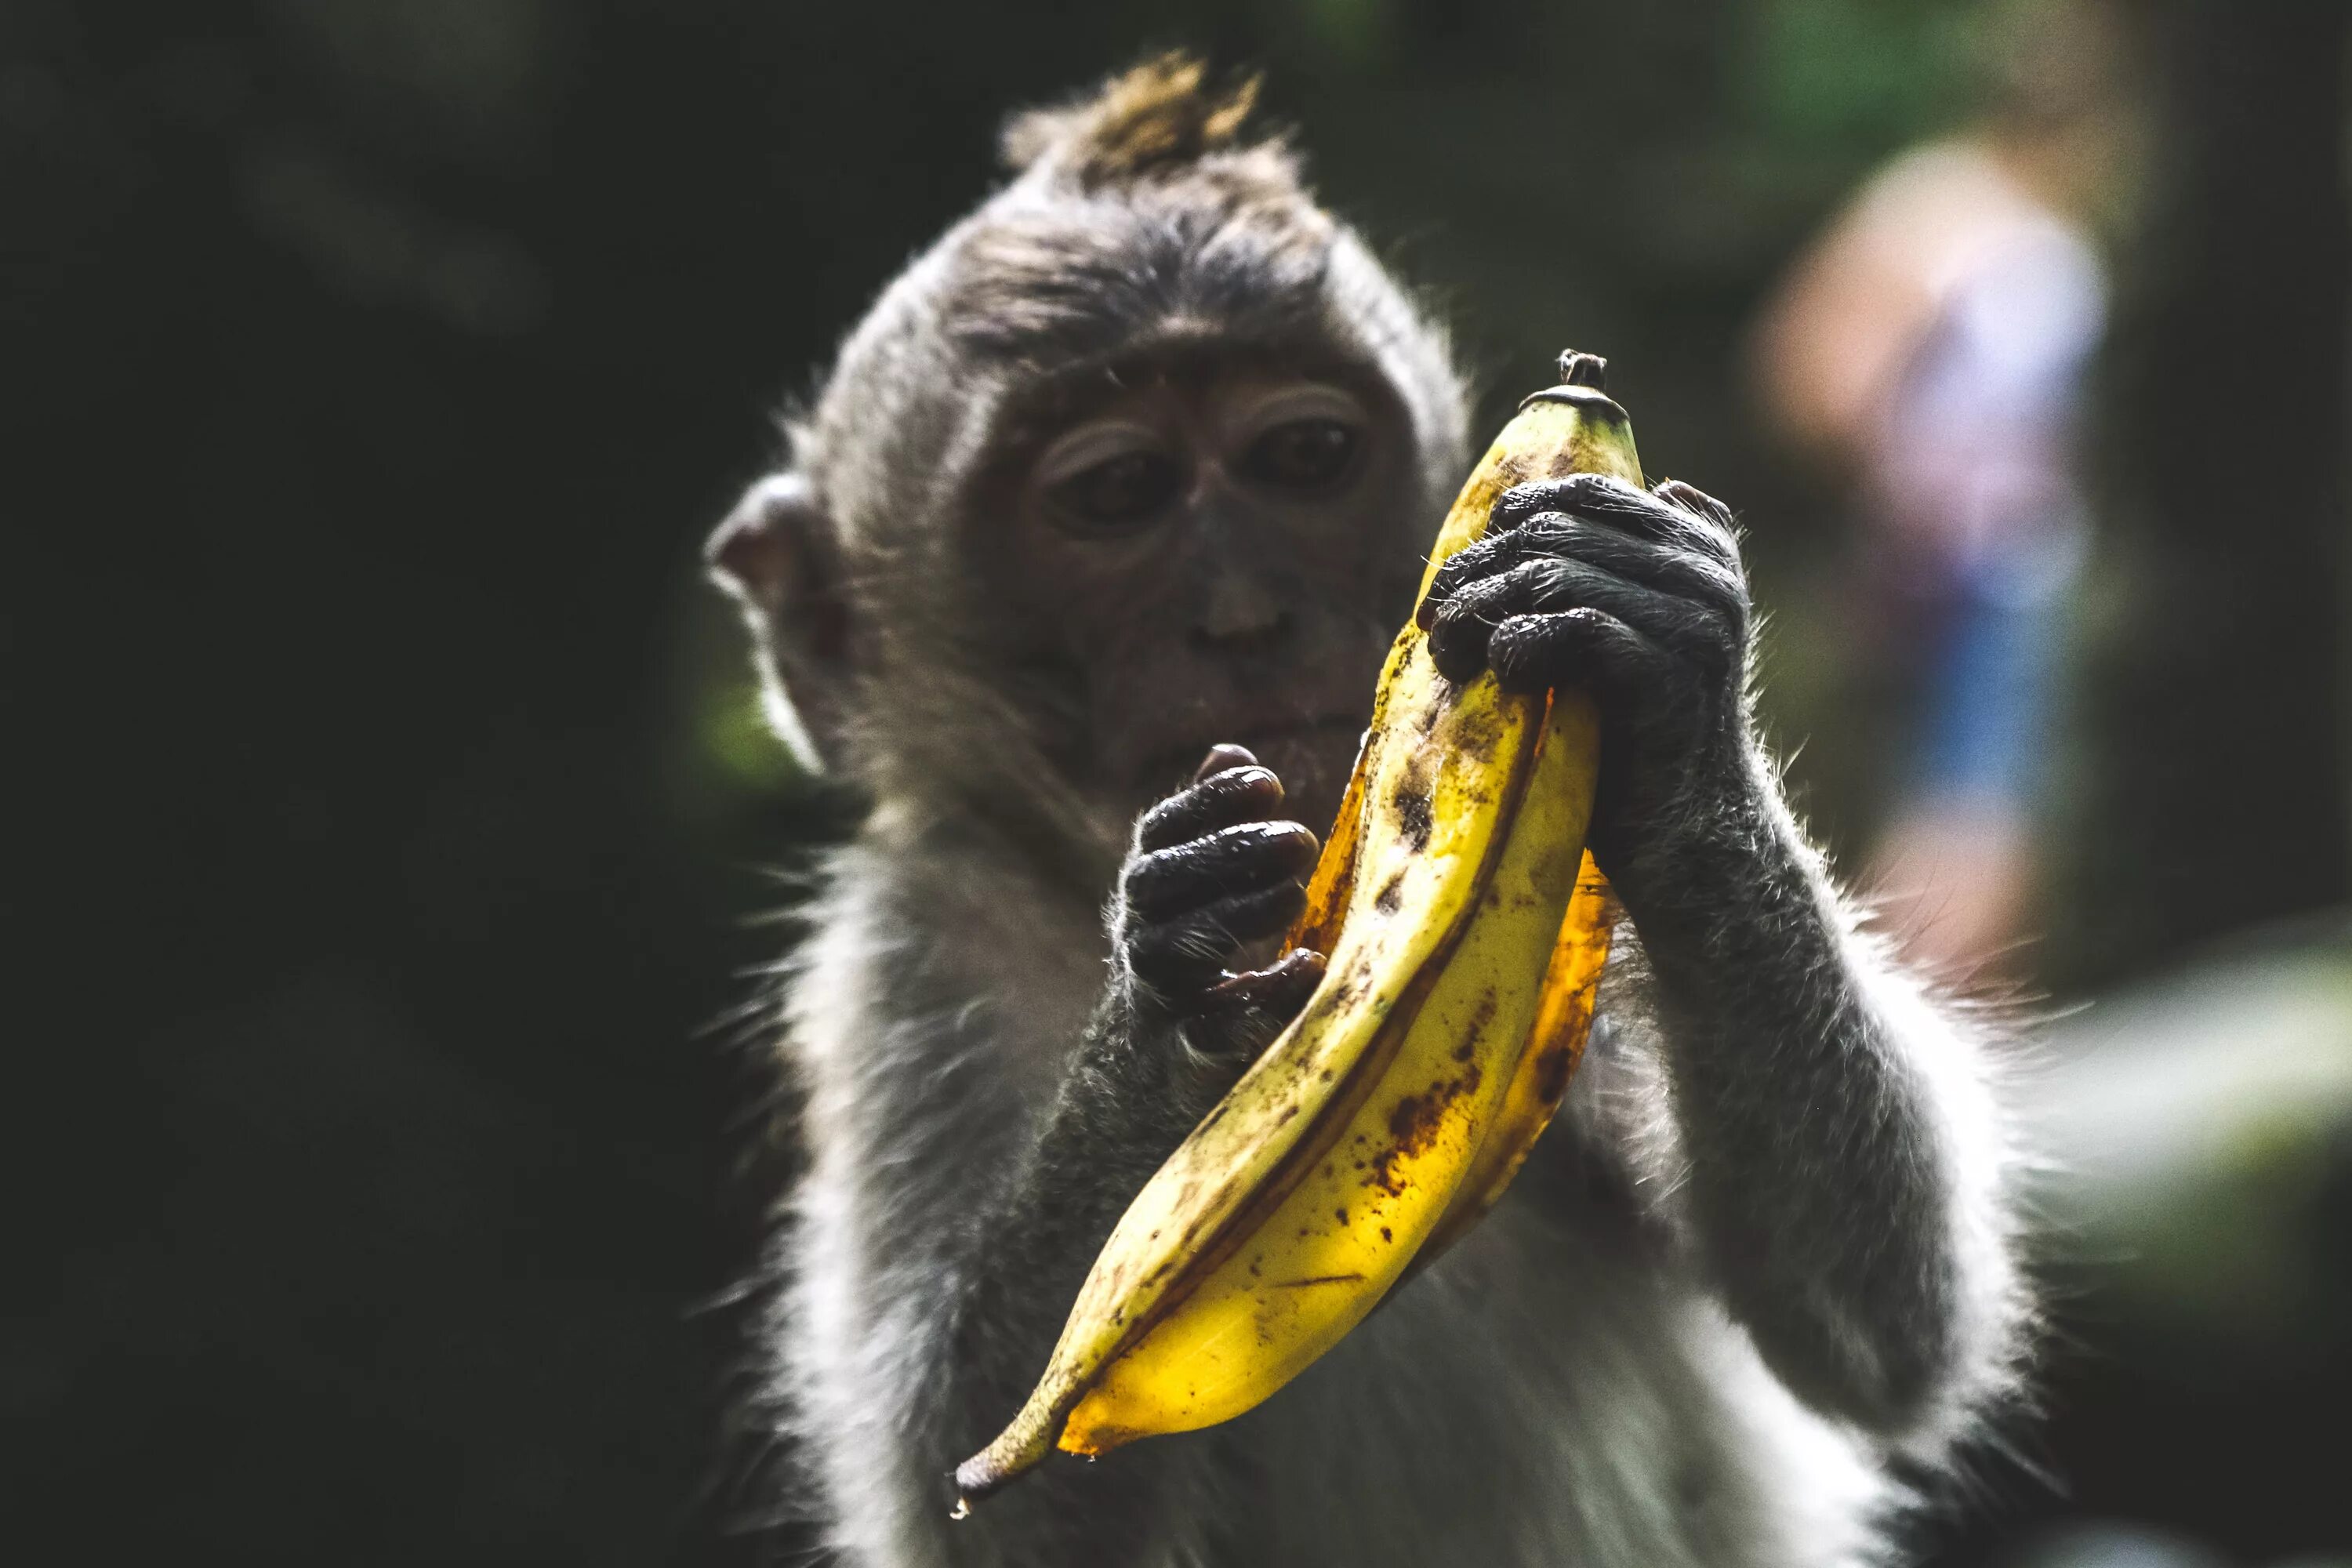 От улыбки обезьяна подавилася бананом. Обезьяна с бананом. Бибизьяна с бонаном. Obezyano s bansnom. Шимпанзе с бананом.